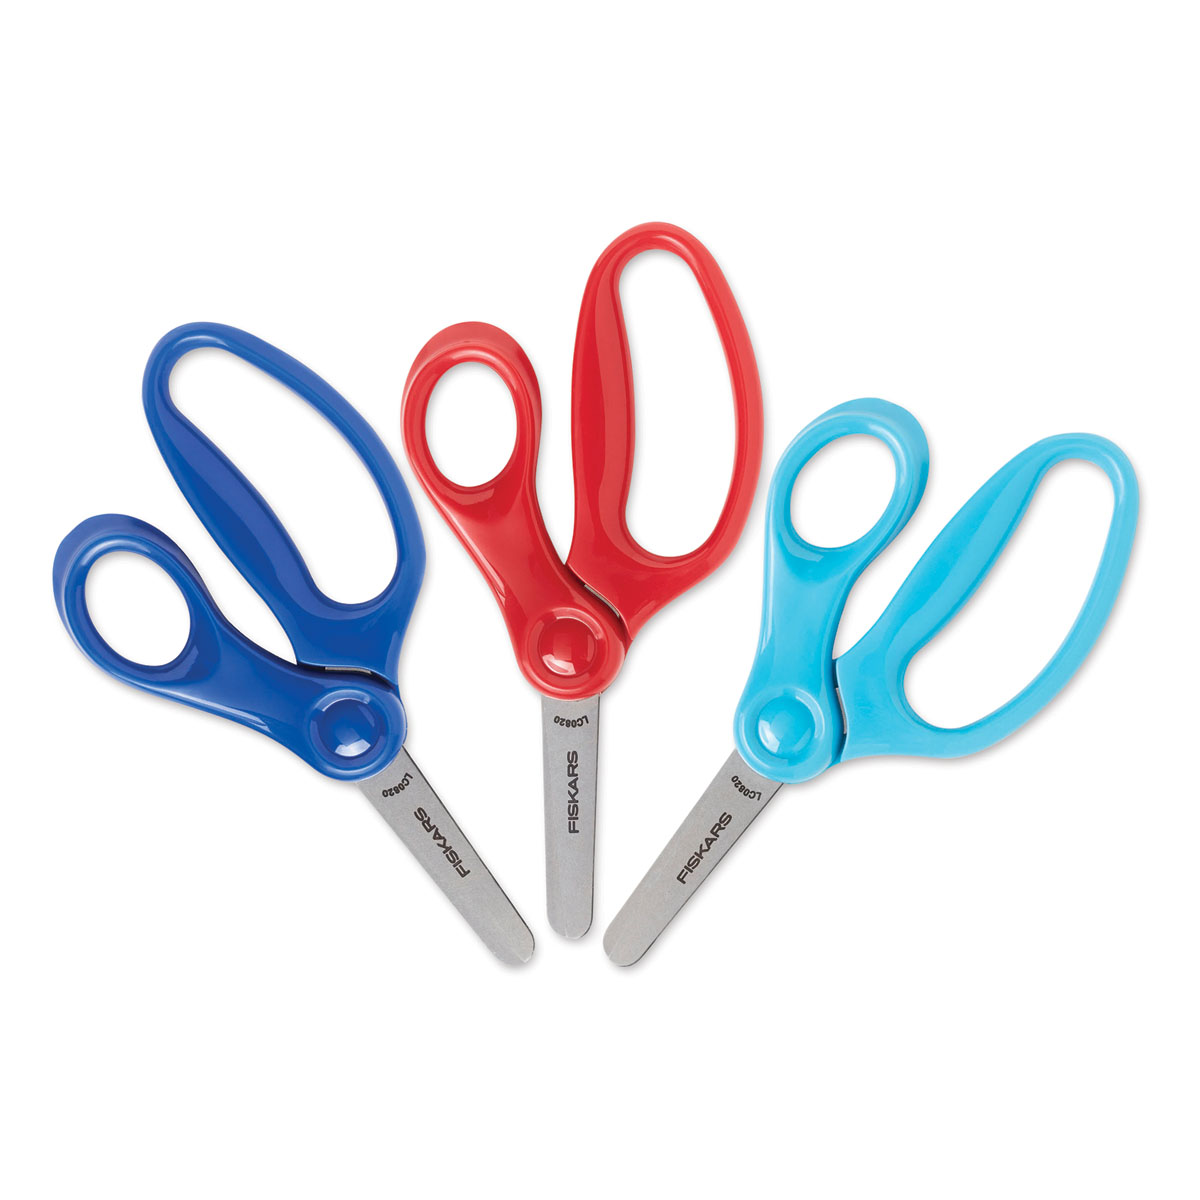 5 Children's Blunt -Tip Scissors, 2-ct. Packs